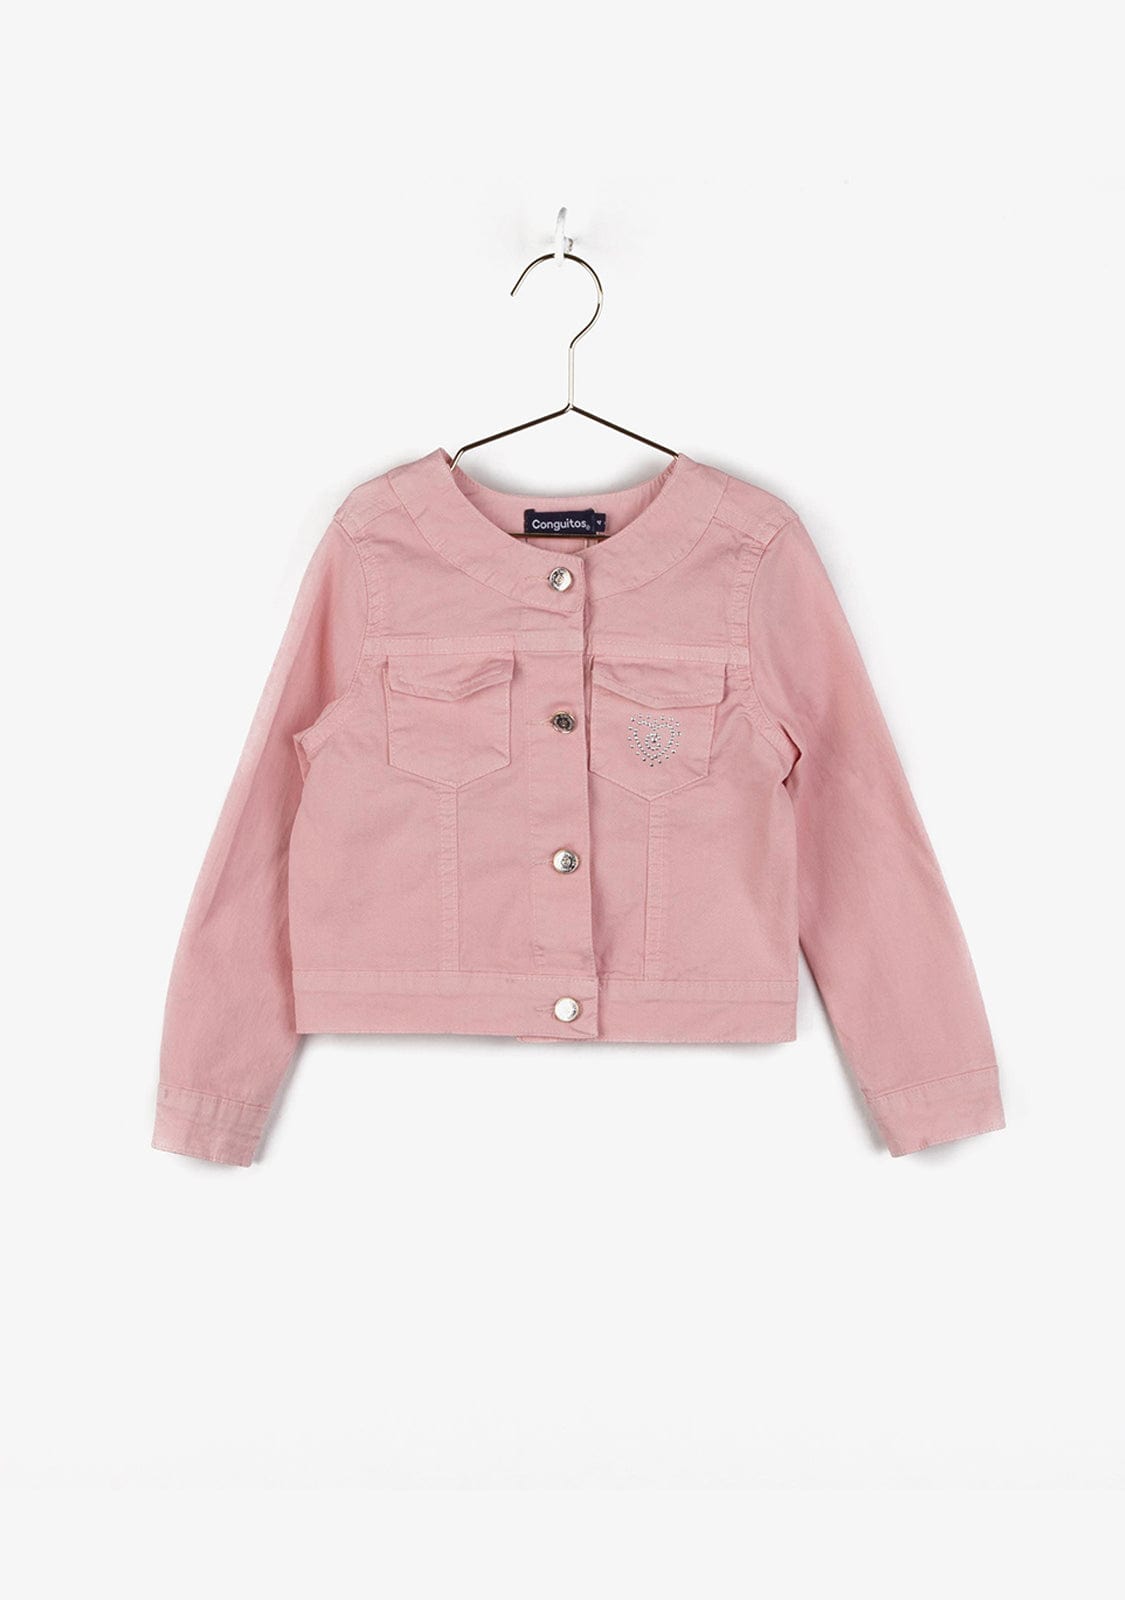 CONGUITOS TEXTIL Clothing Girl's Light Pink Jacket